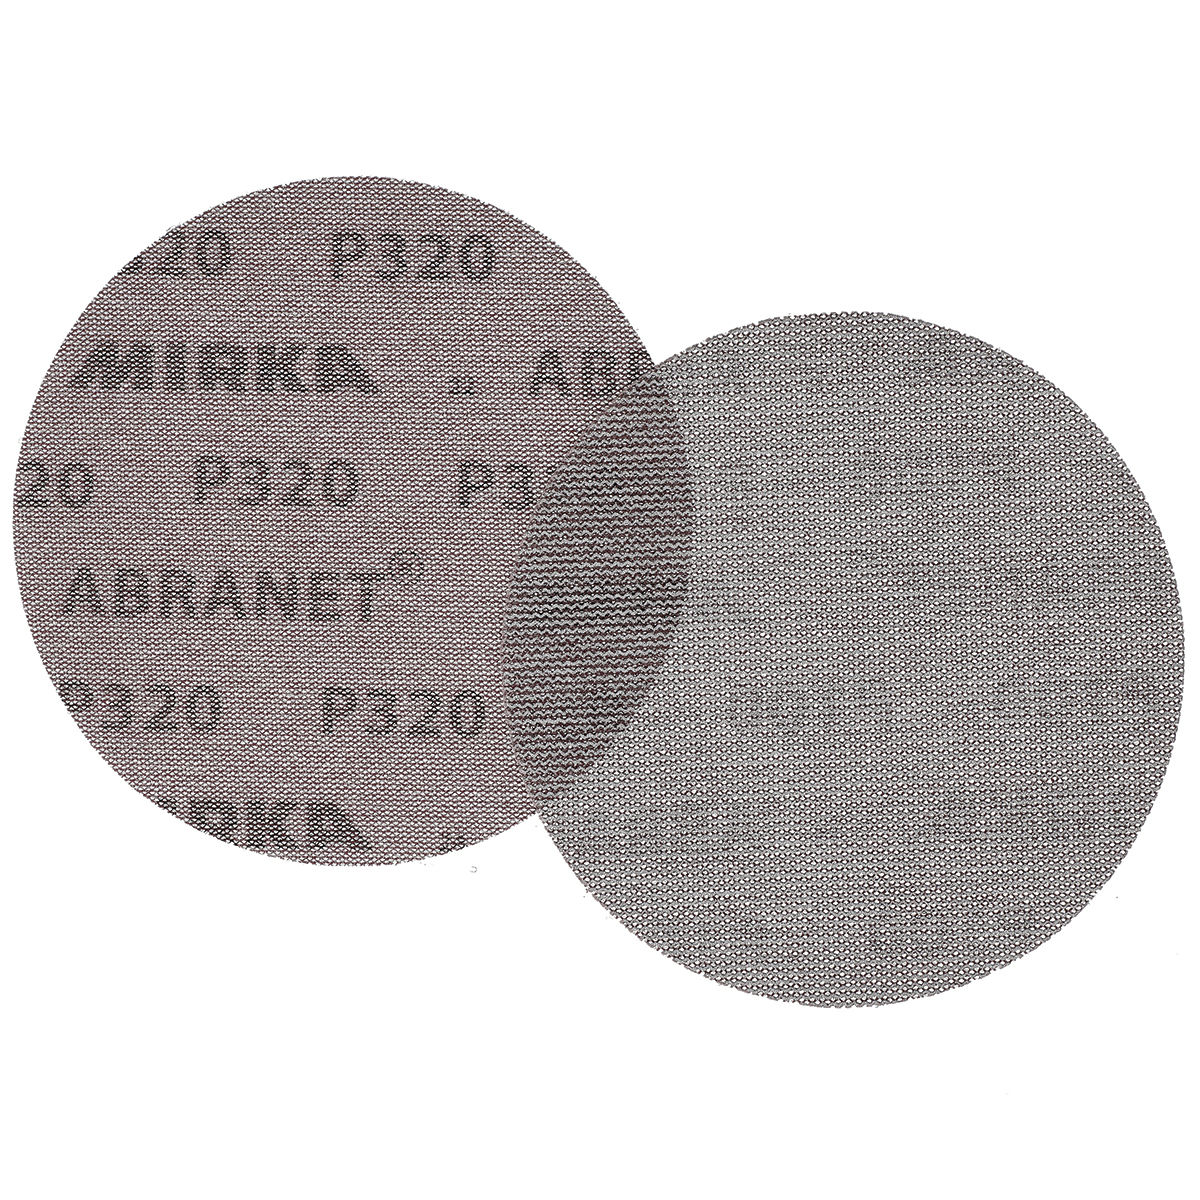 Mirka Abranet autonet 150mm Sanding Discs P240 Grit Pack of 10